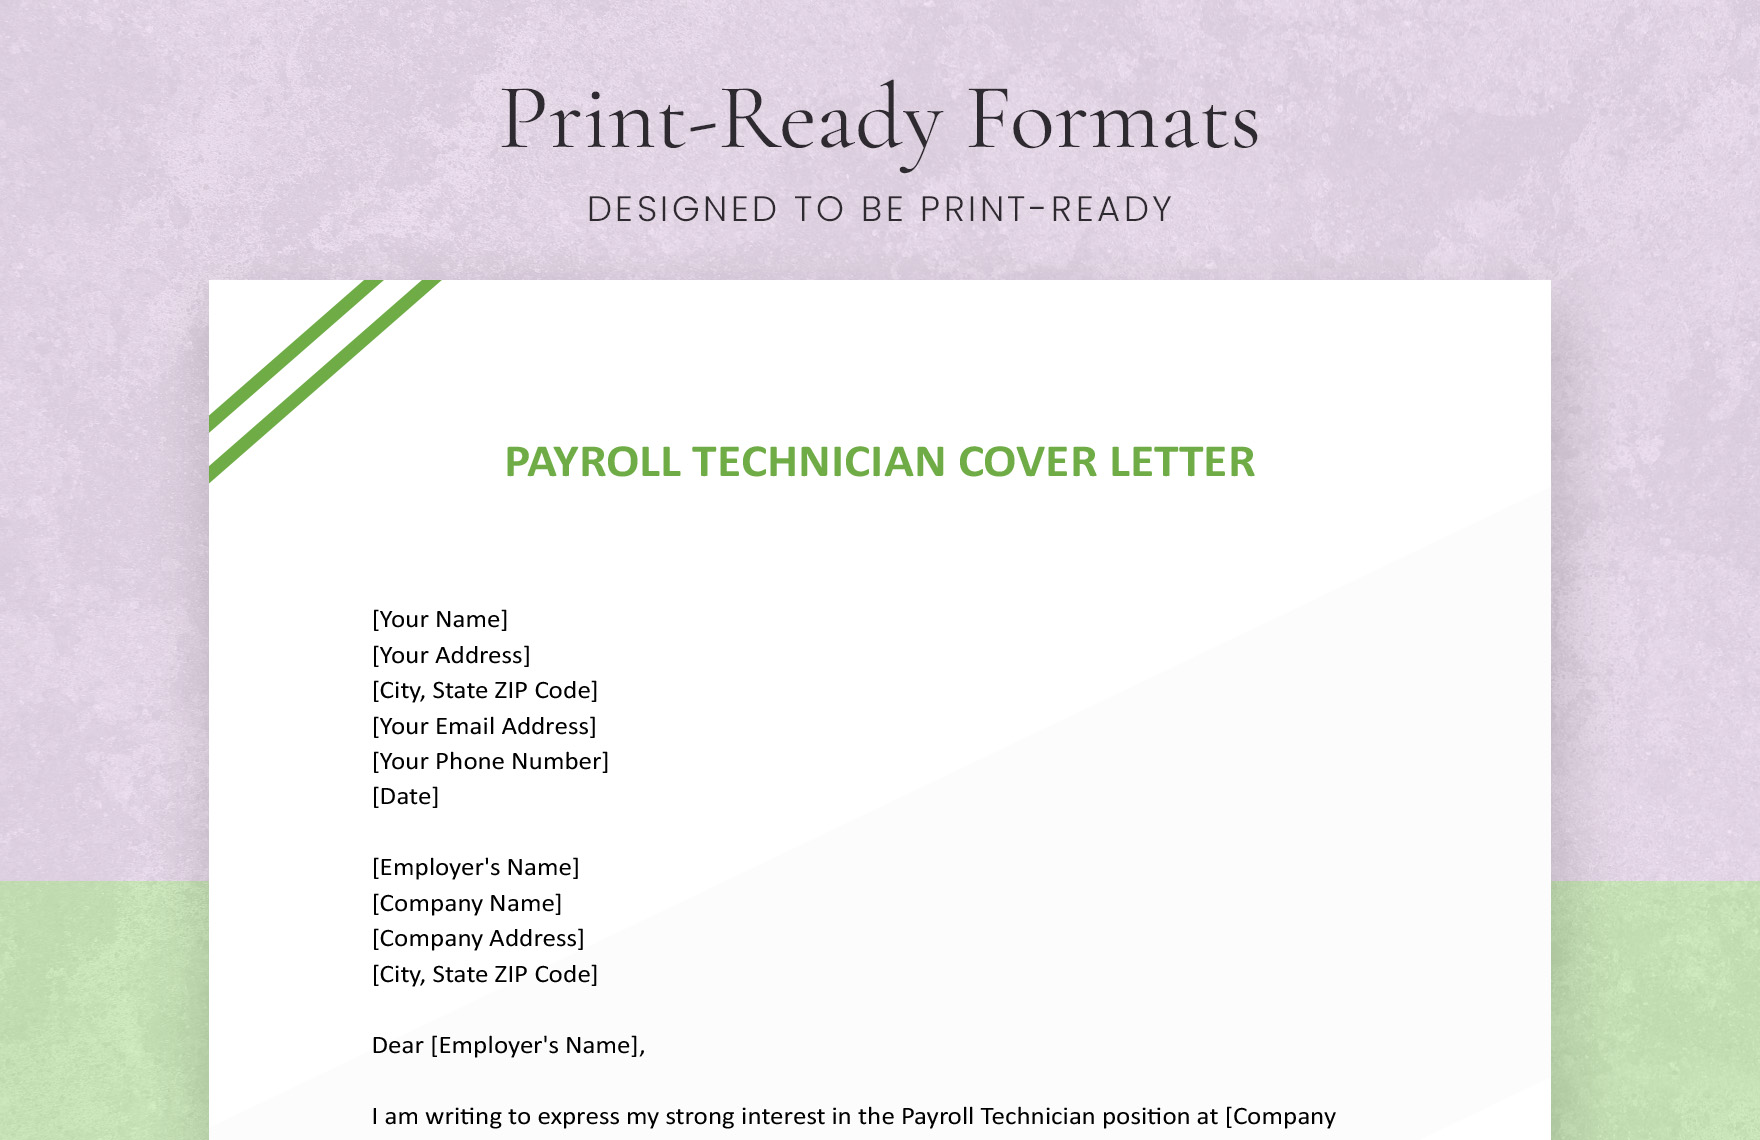 Payroll Technician Cover Letter